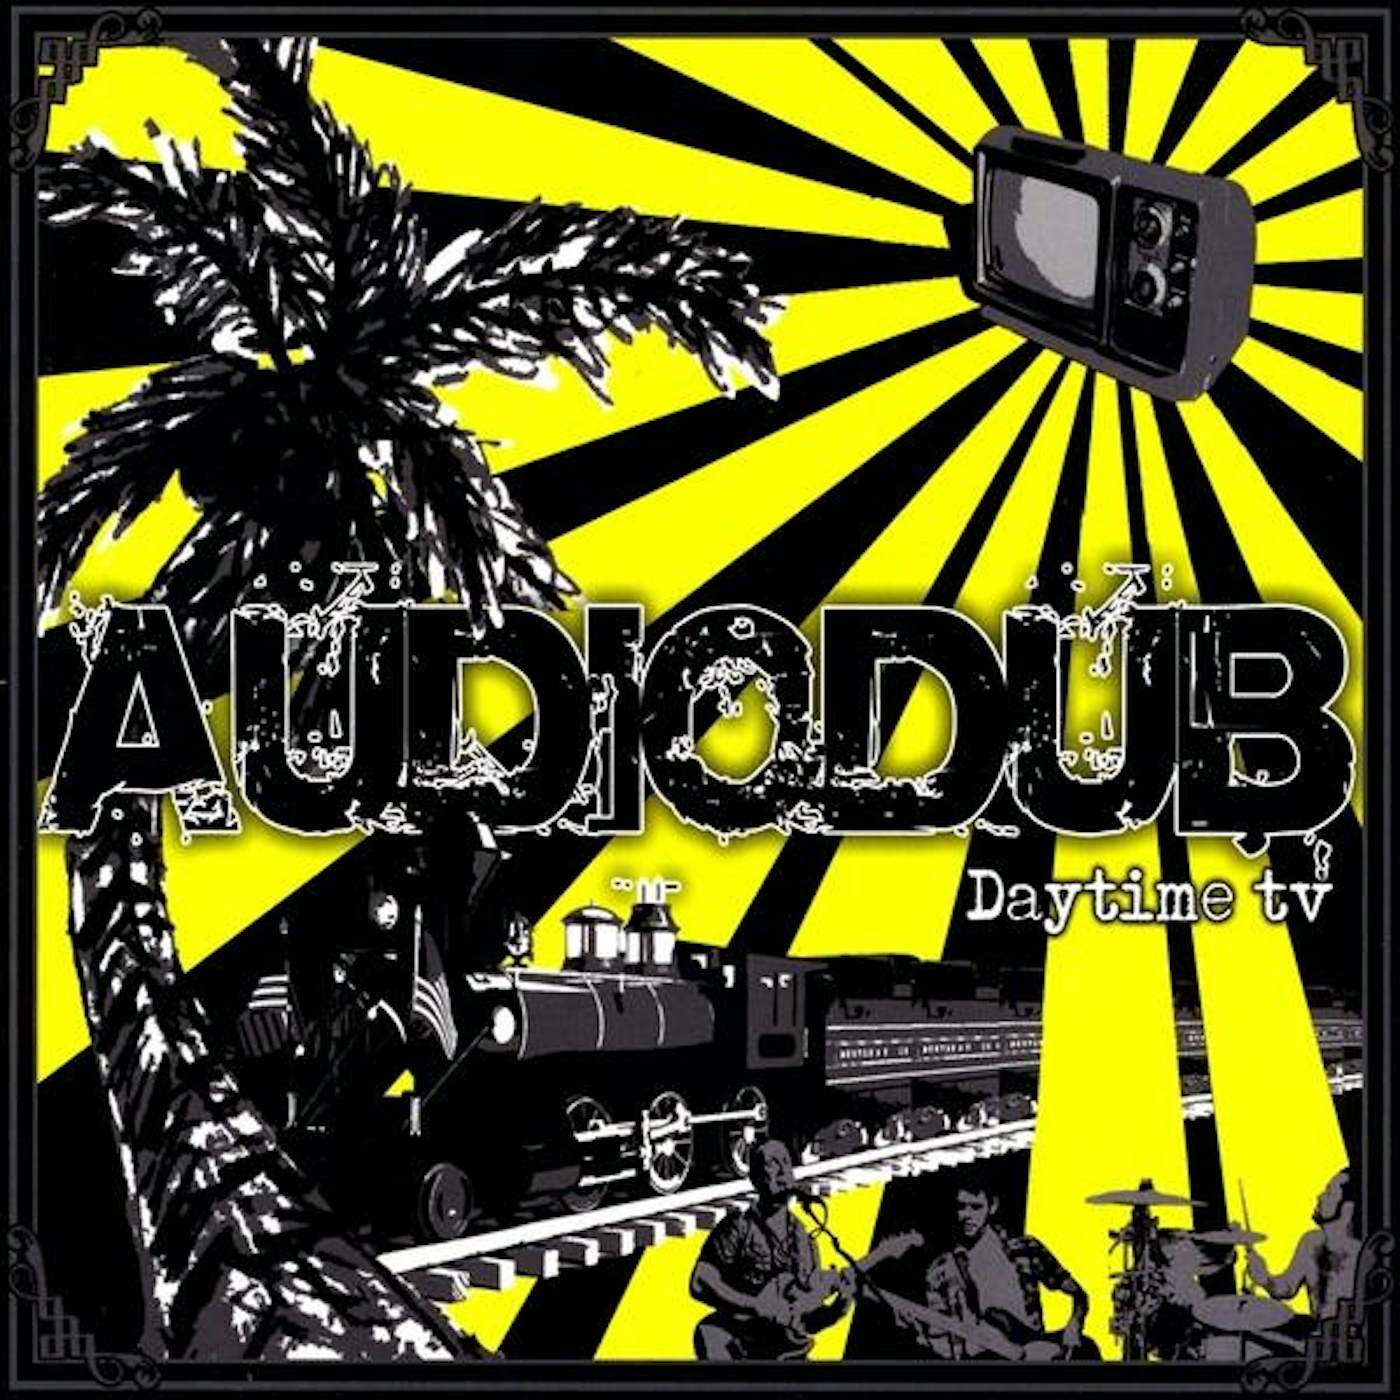 Audiodub DAYTIME TV CD